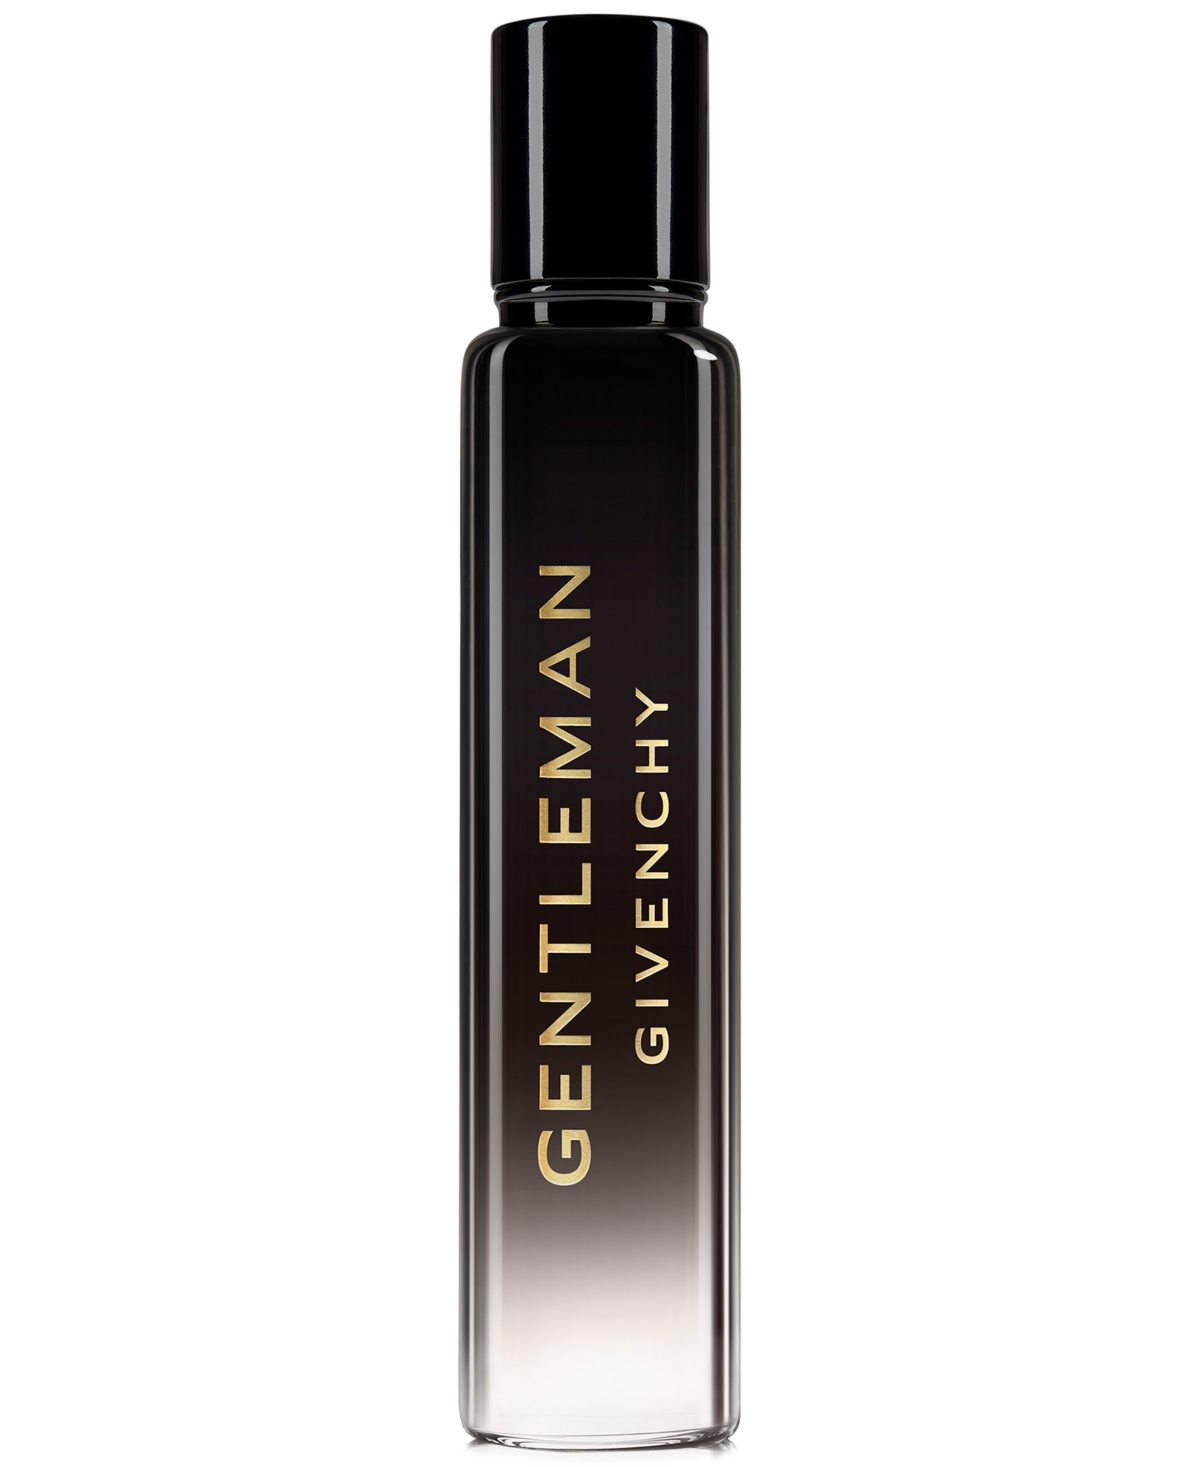 Givenchy Gentleman Boisee Eau De Parfum Spray, 0.67 Oz.